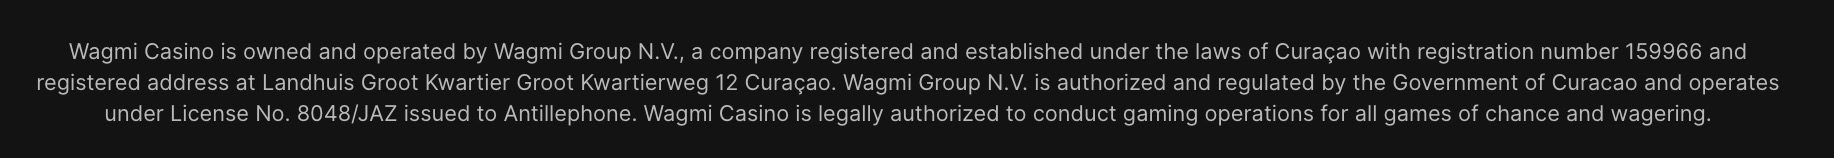 WAGMI casino licence